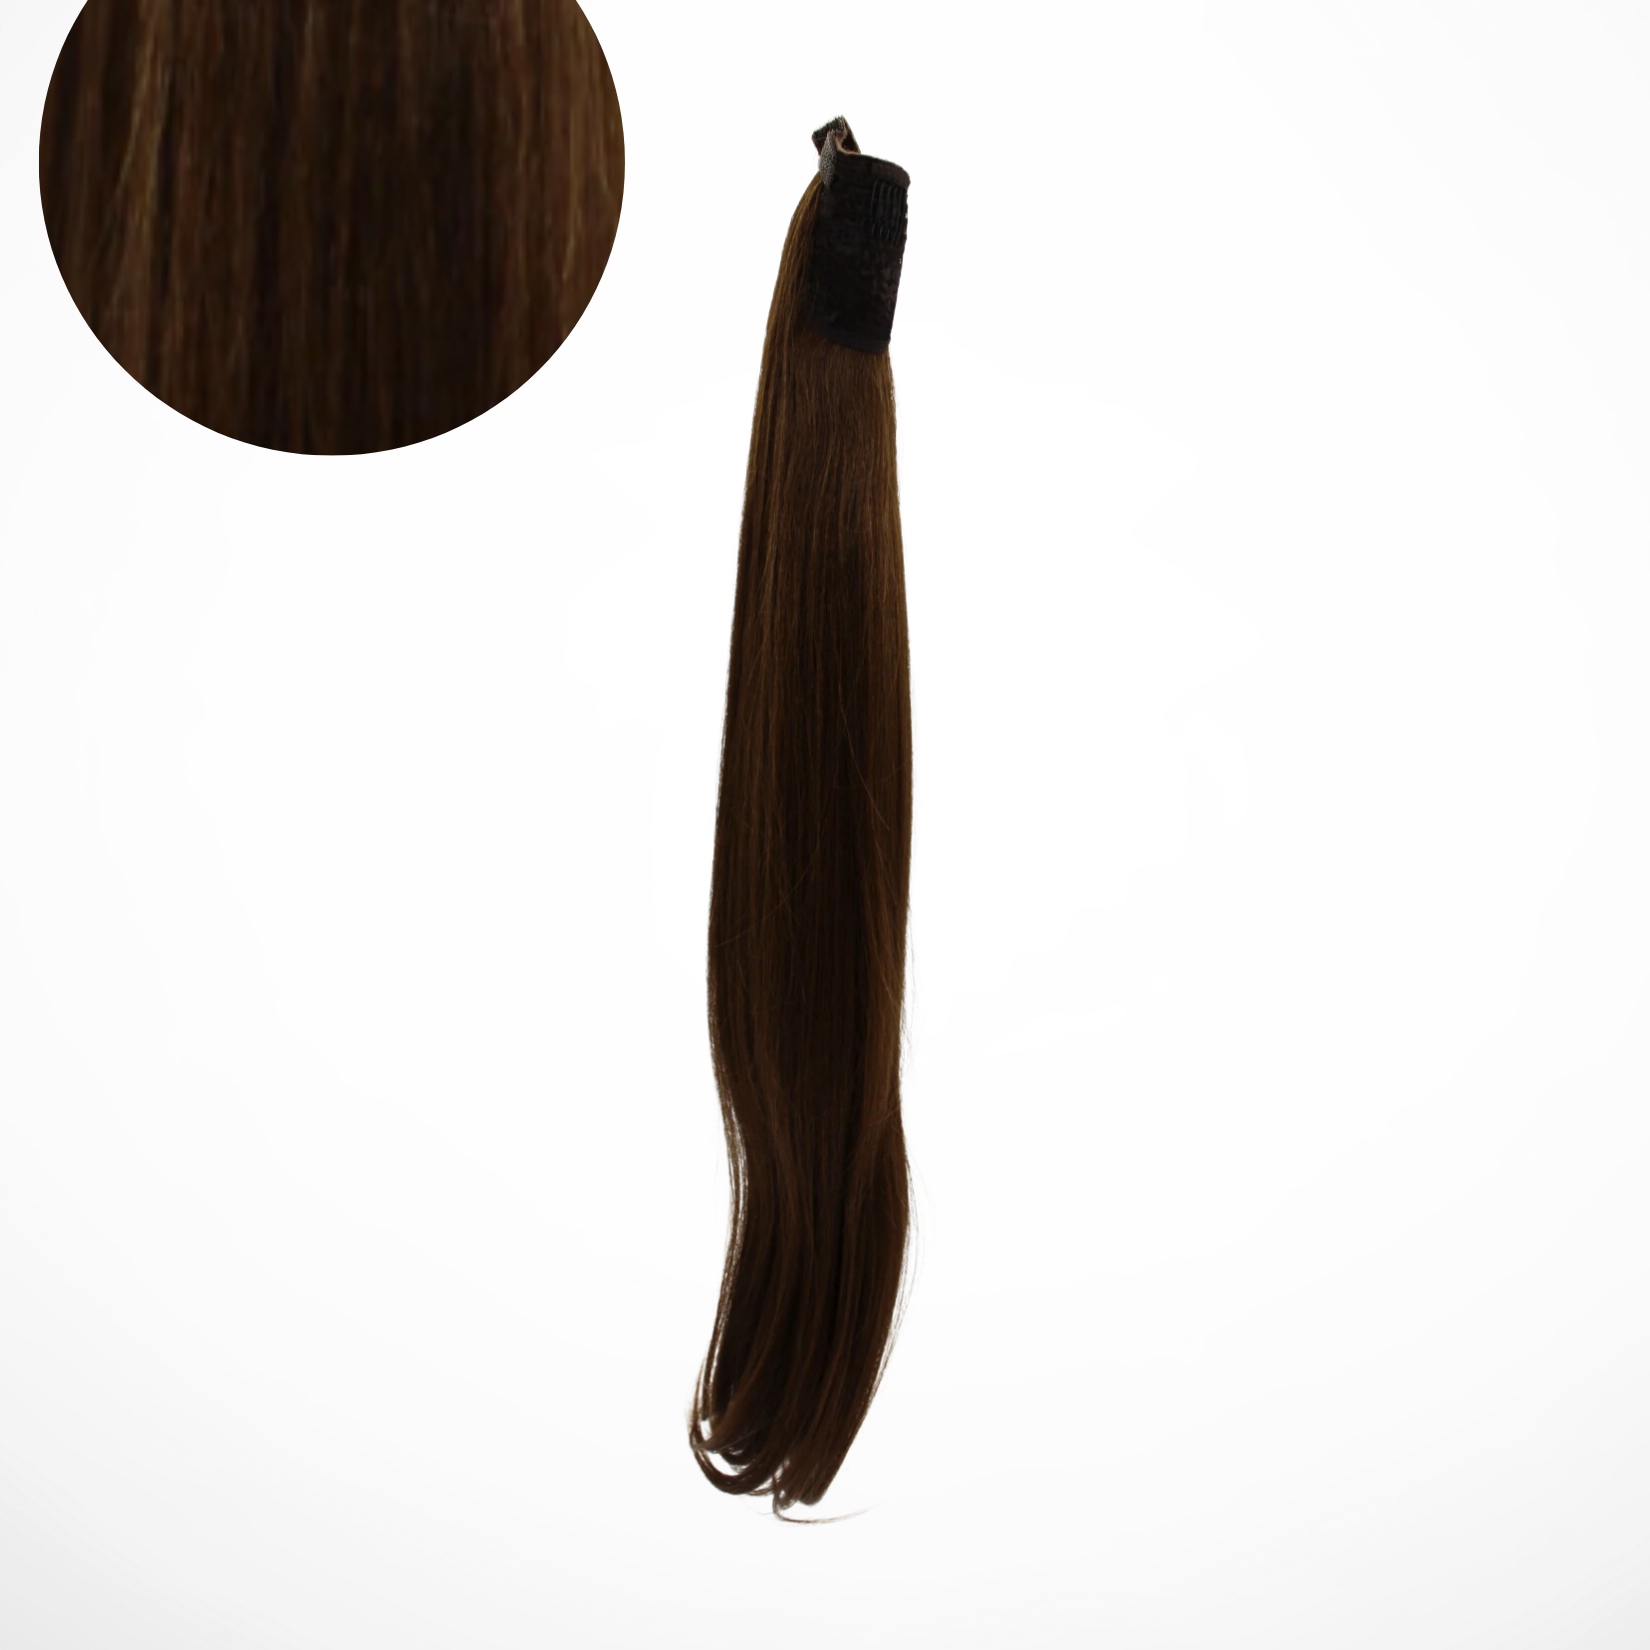 The Rae Lush Curl Salon-Quality DIY Ponytail Hair Extension